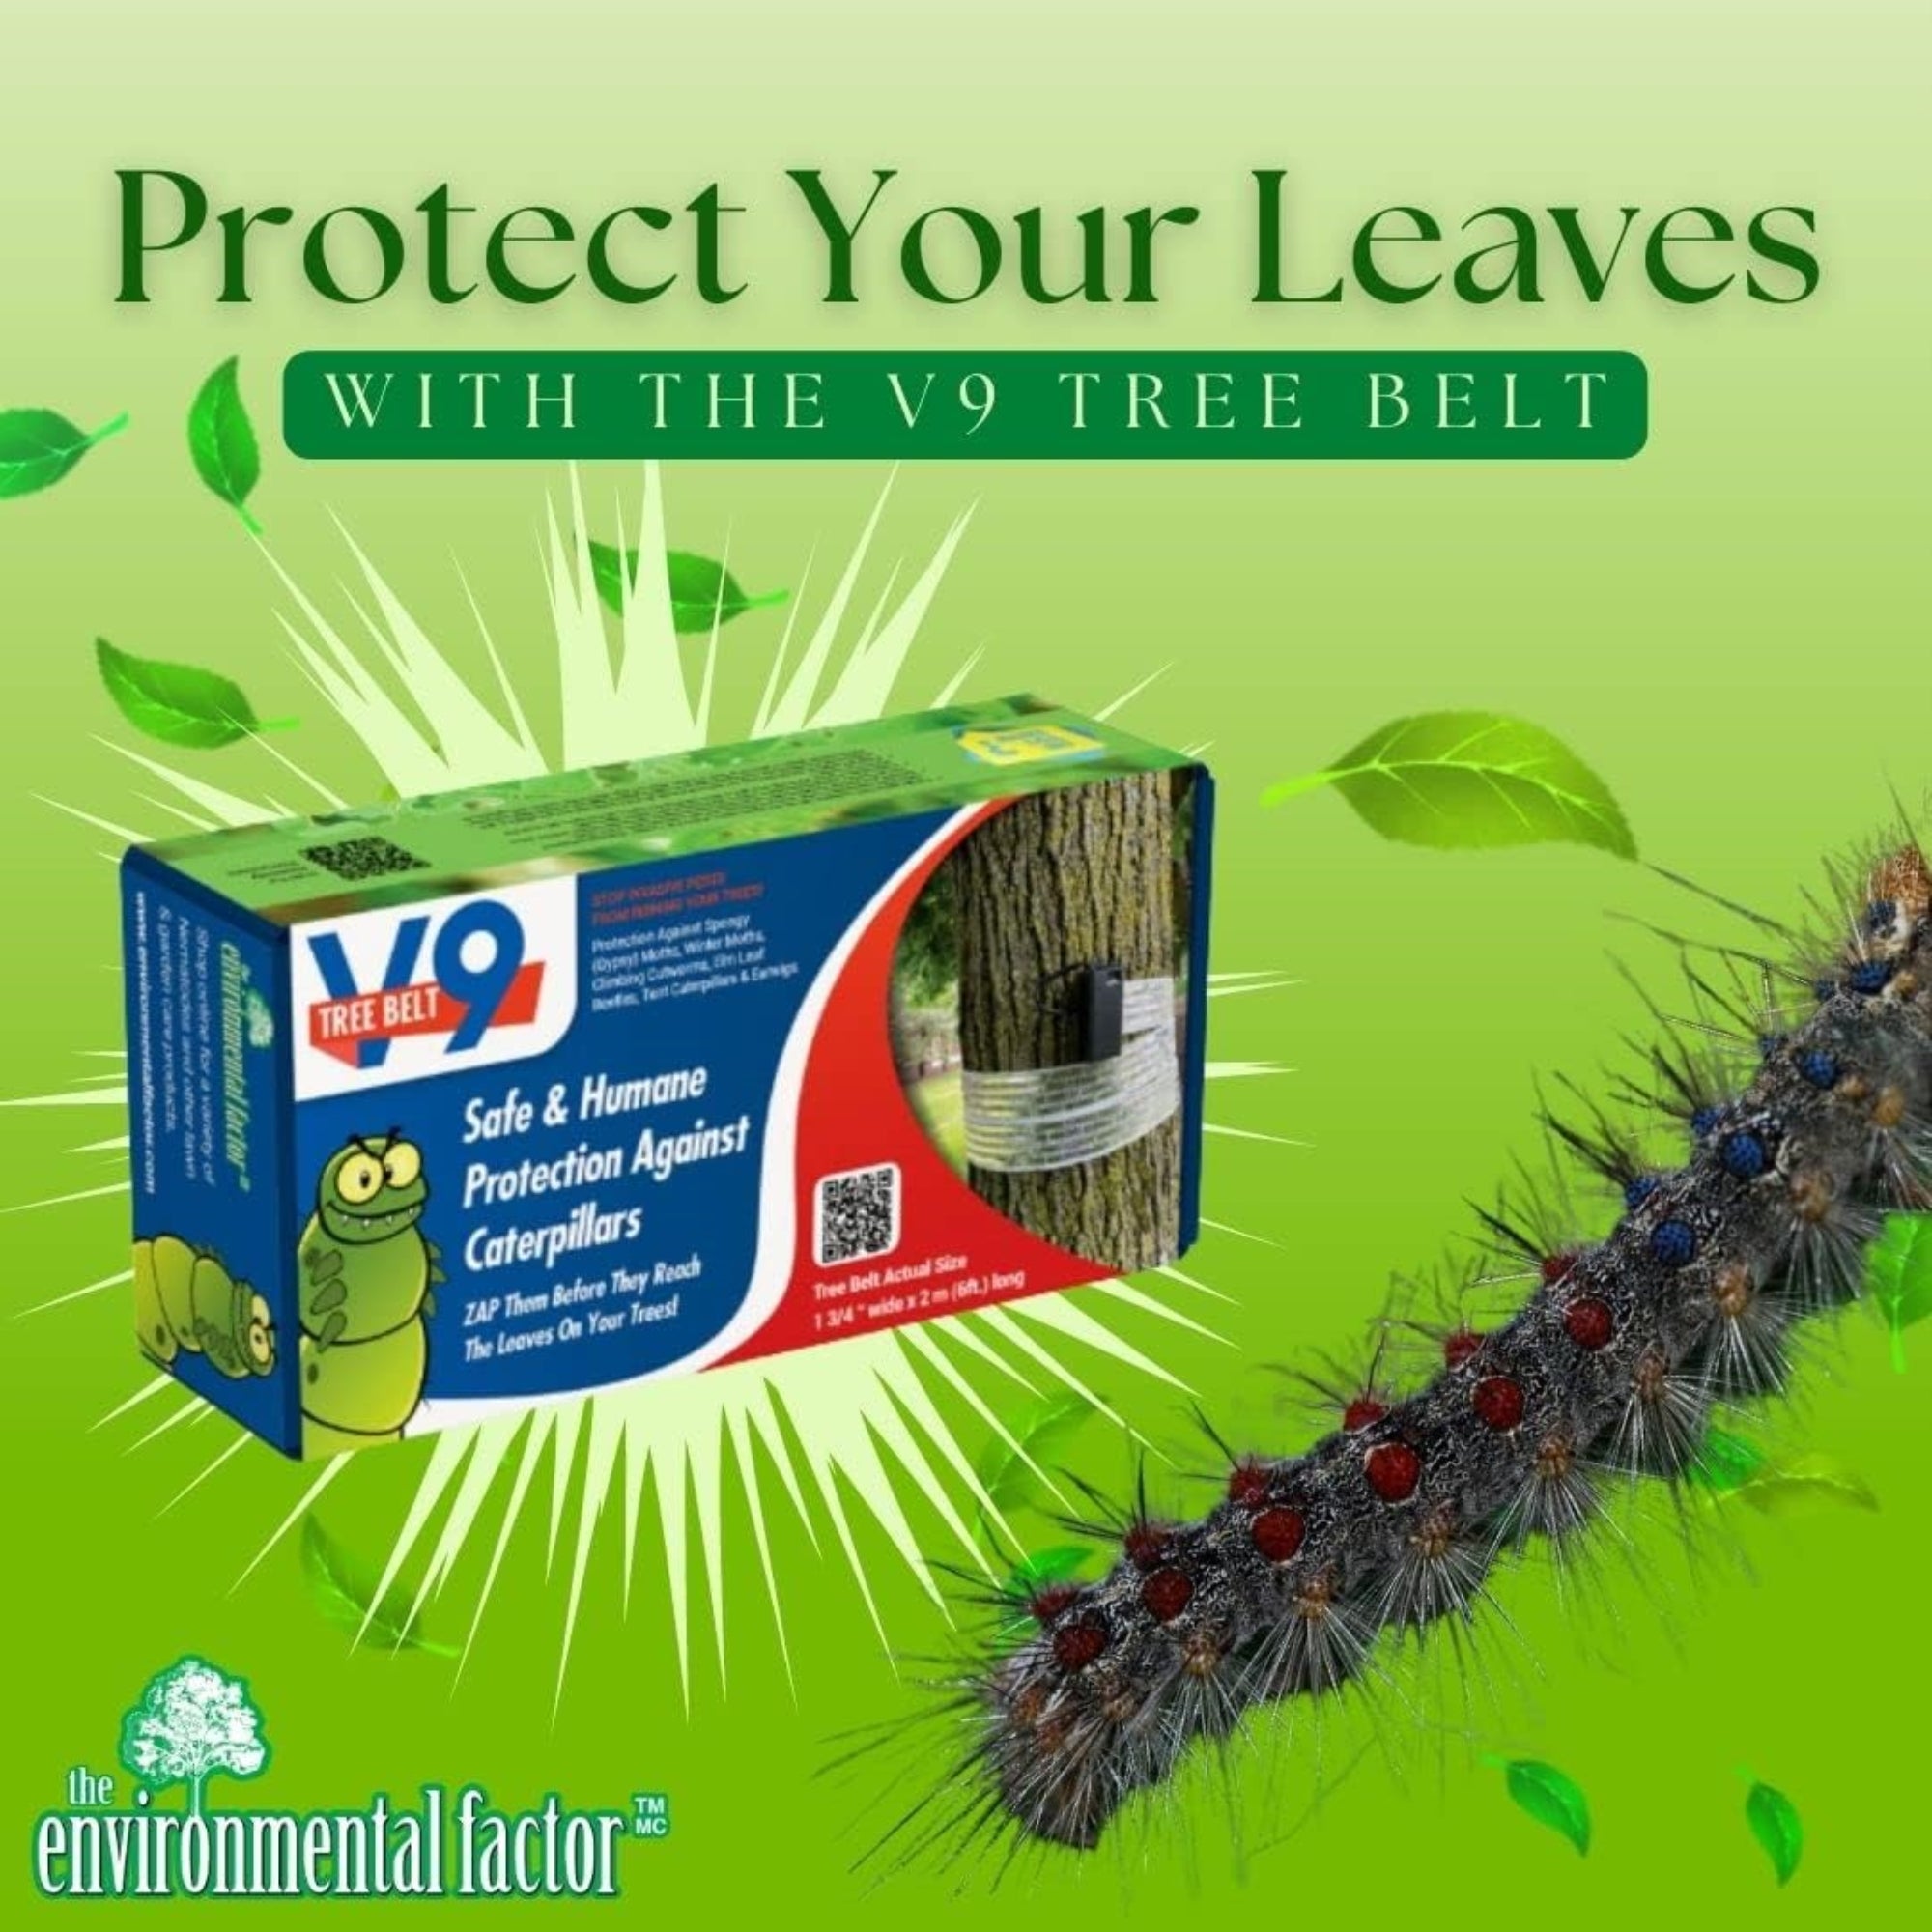 The Environmental Factor V9 TREE BELT Bug Zapper, Safe & Humane Protection Against Caterpillars, 6 Feet Long